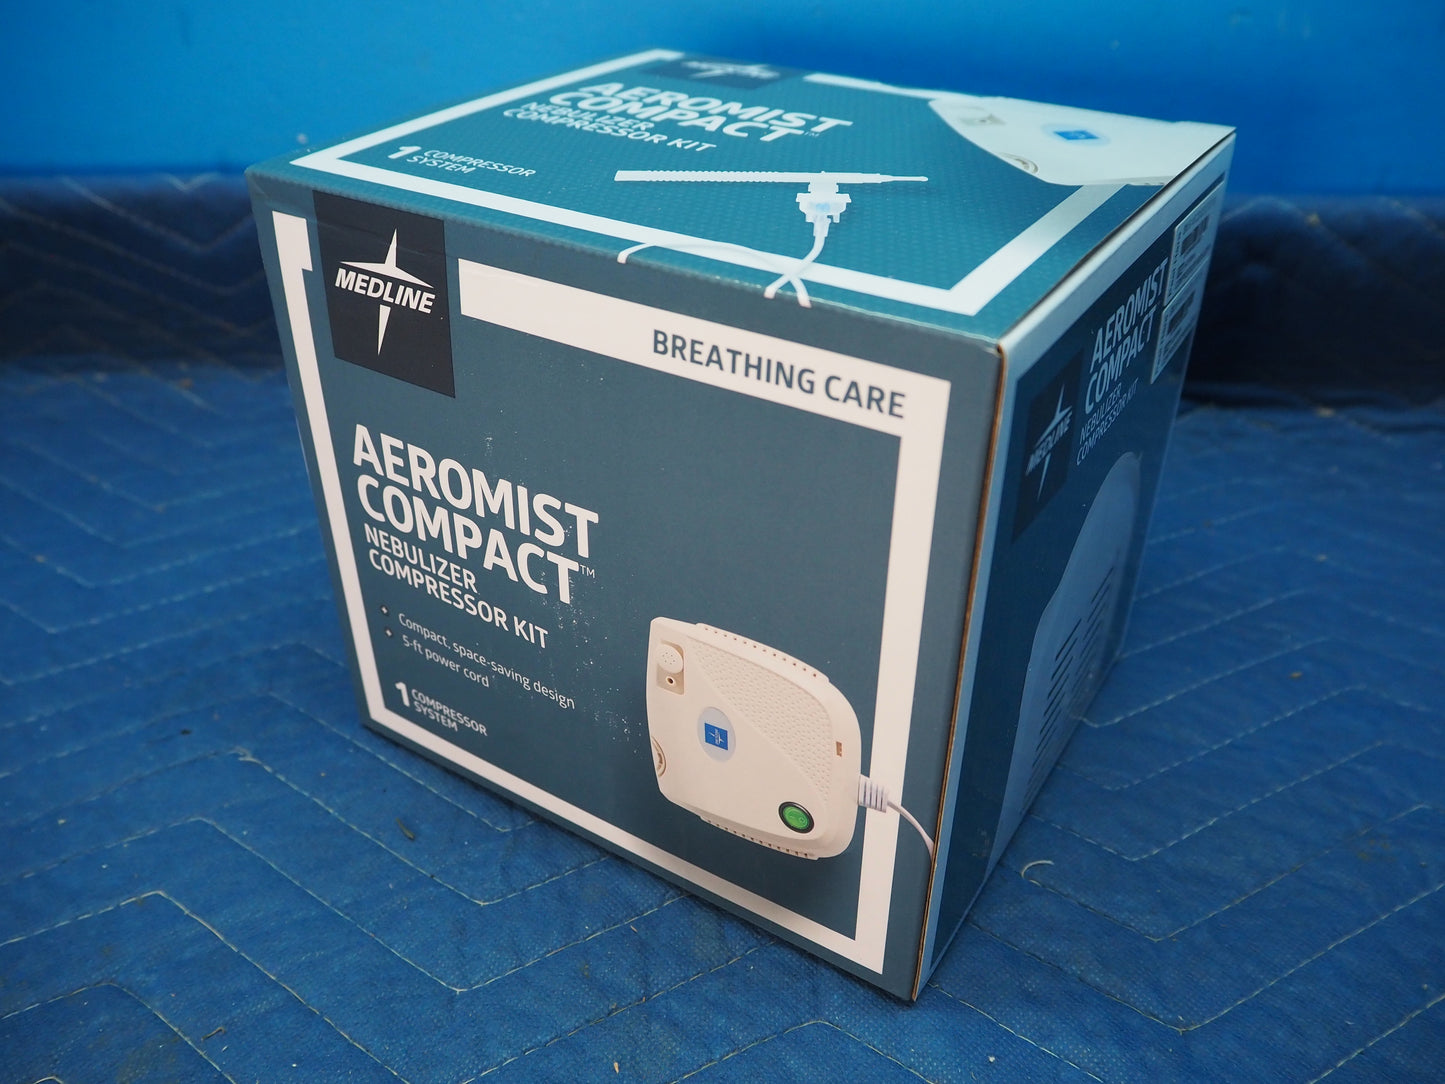 Medline Aeromist Compact Compressor System Kit Respiratory Care - HCS70004 - New